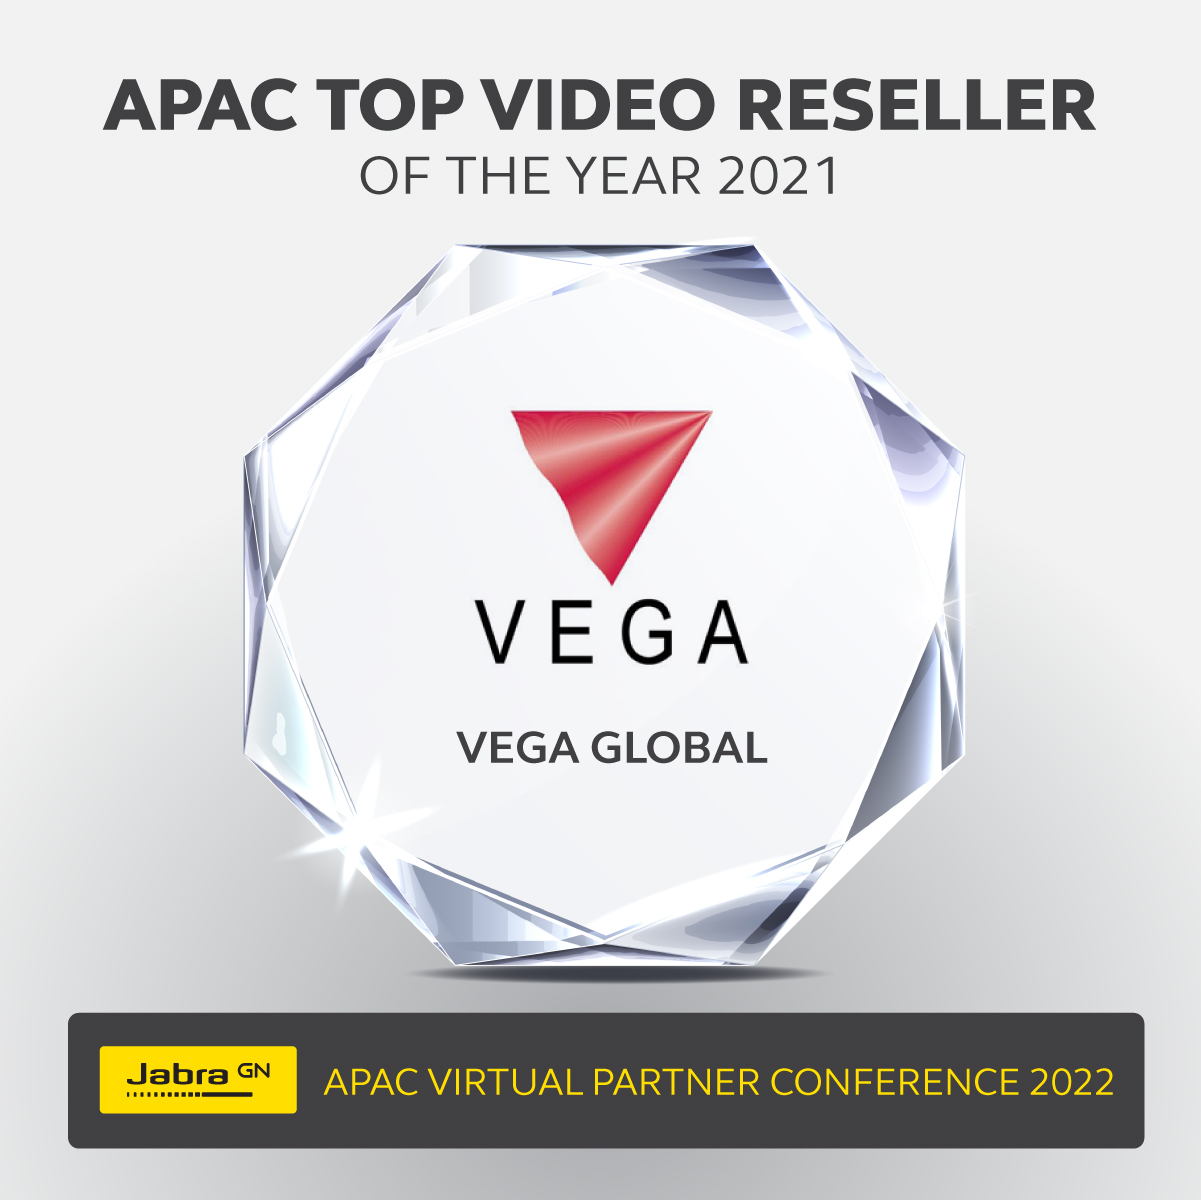 Jabra awards Vega as“APAC Top Video Reseller